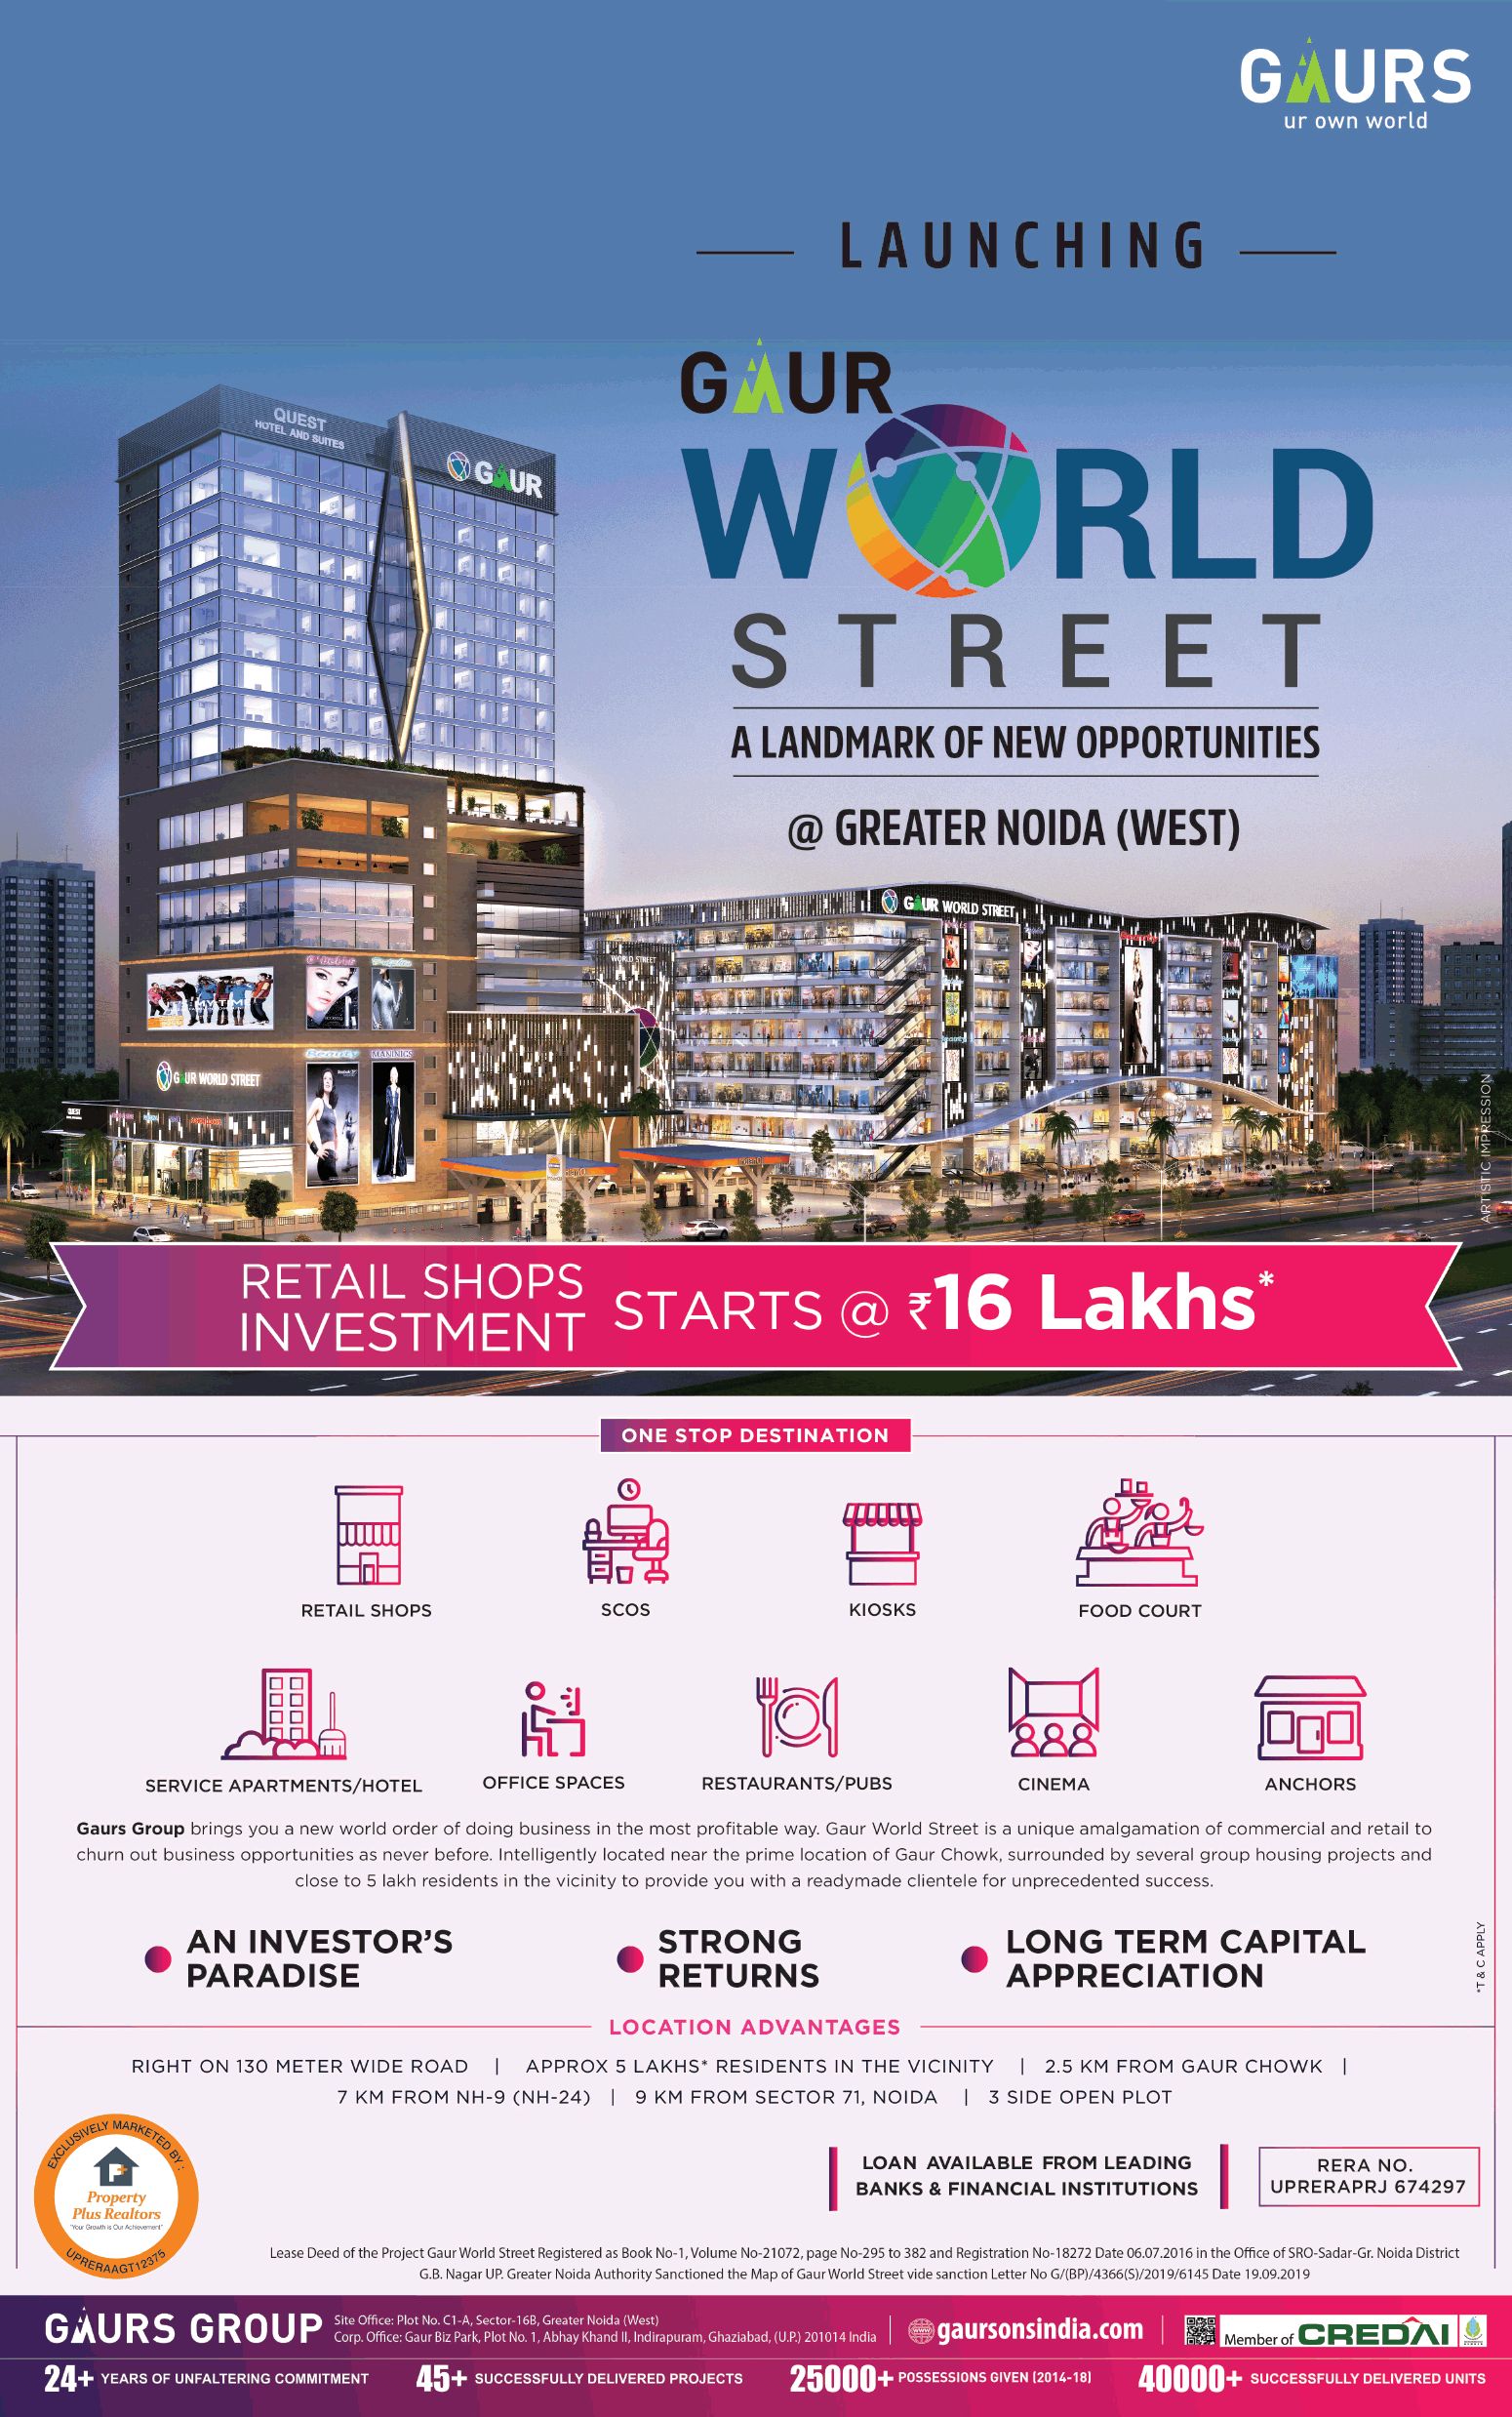 Retail shops investment starts Rs 16 Lac at Gaur World Street, Noida